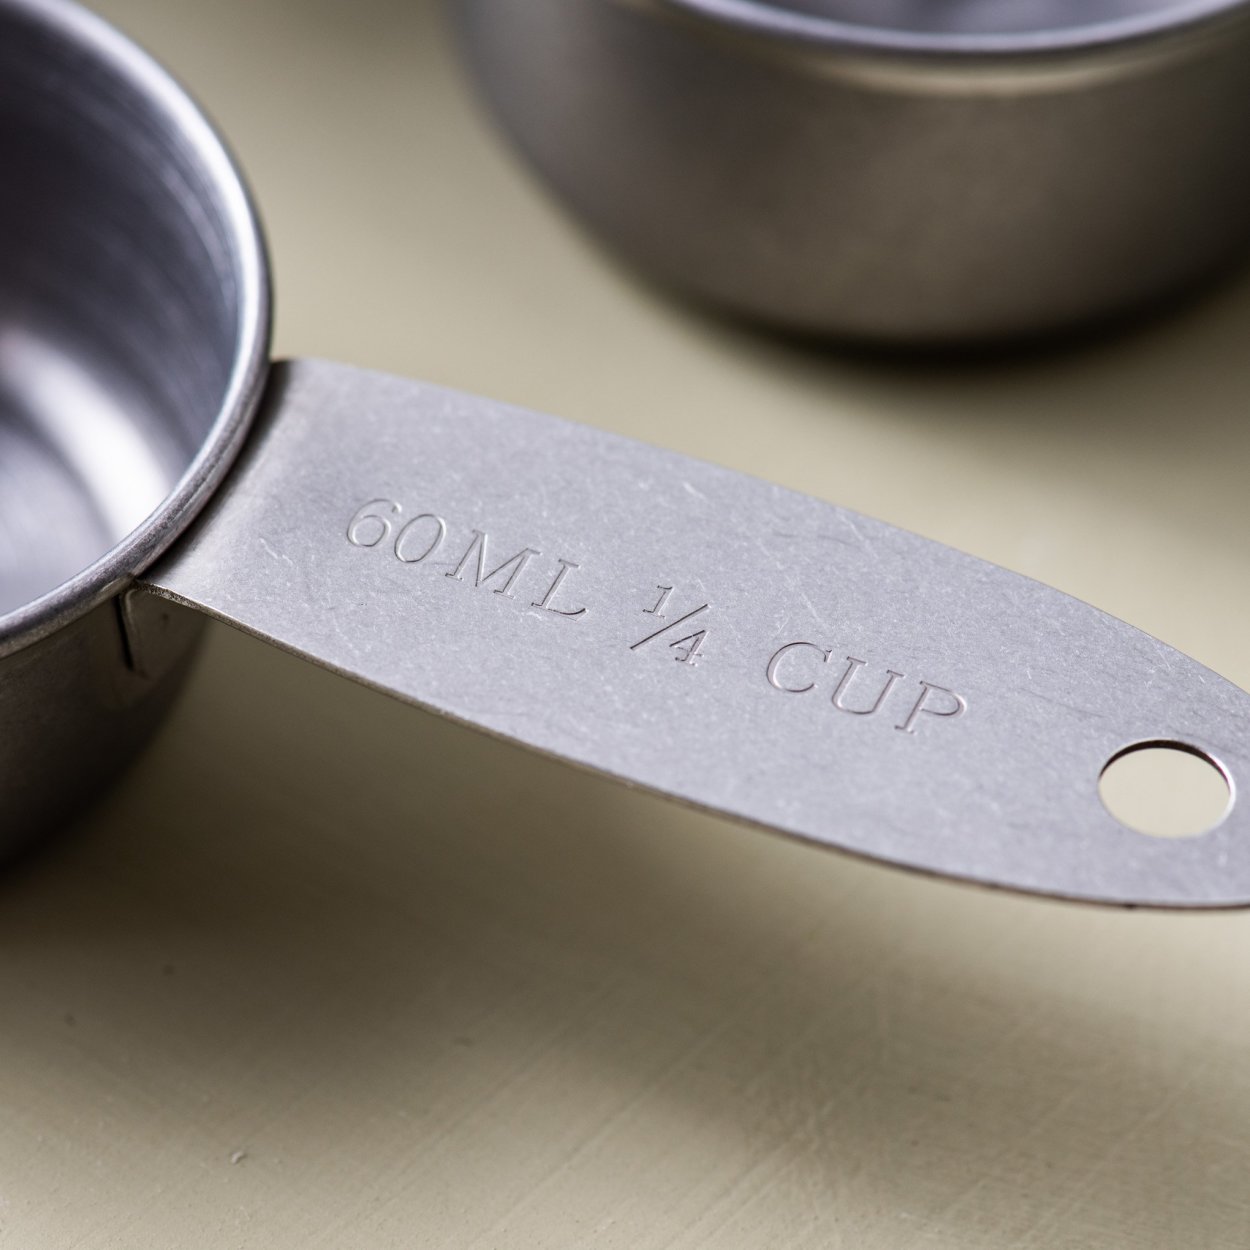 Teak & Stainless Measuring Cups/Be Home/Housewares – igourmet